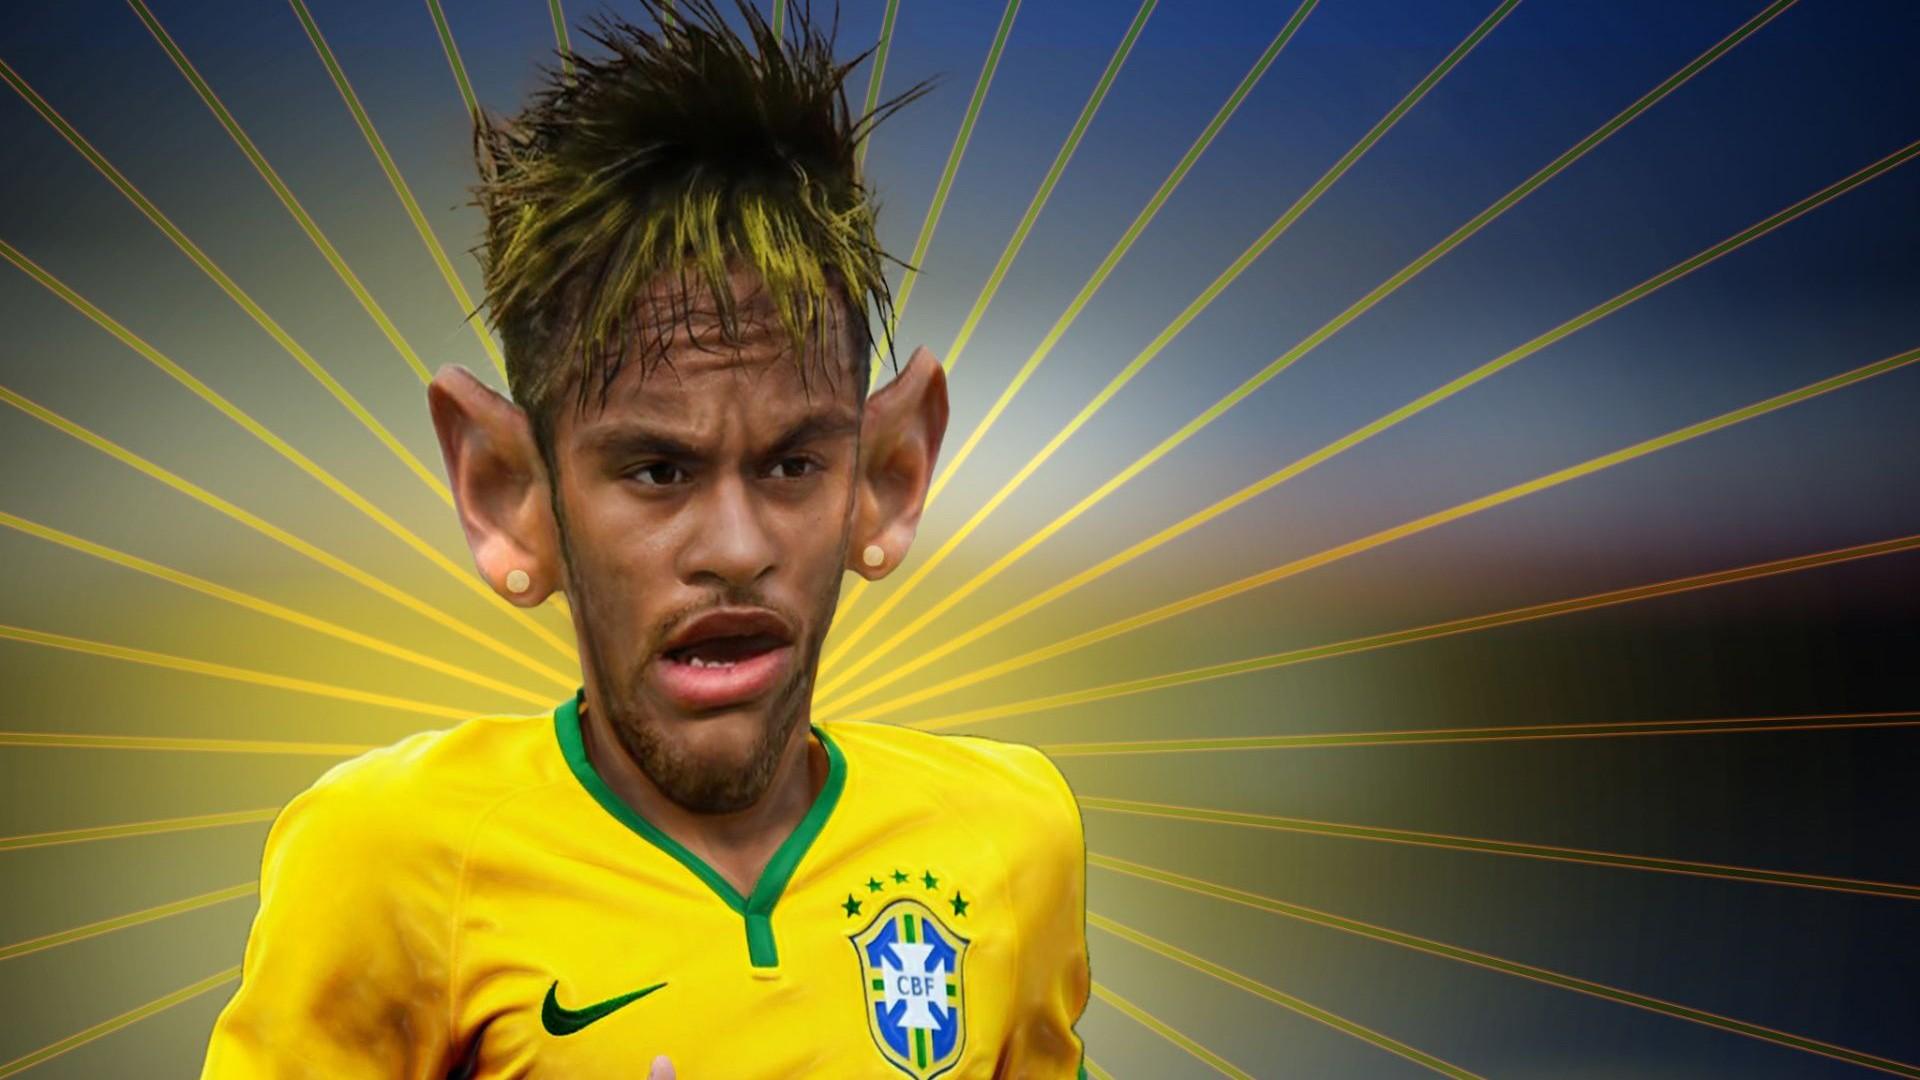 Neymar Cartoon Wallpapers - Top Free Neymar Cartoon Backgrounds